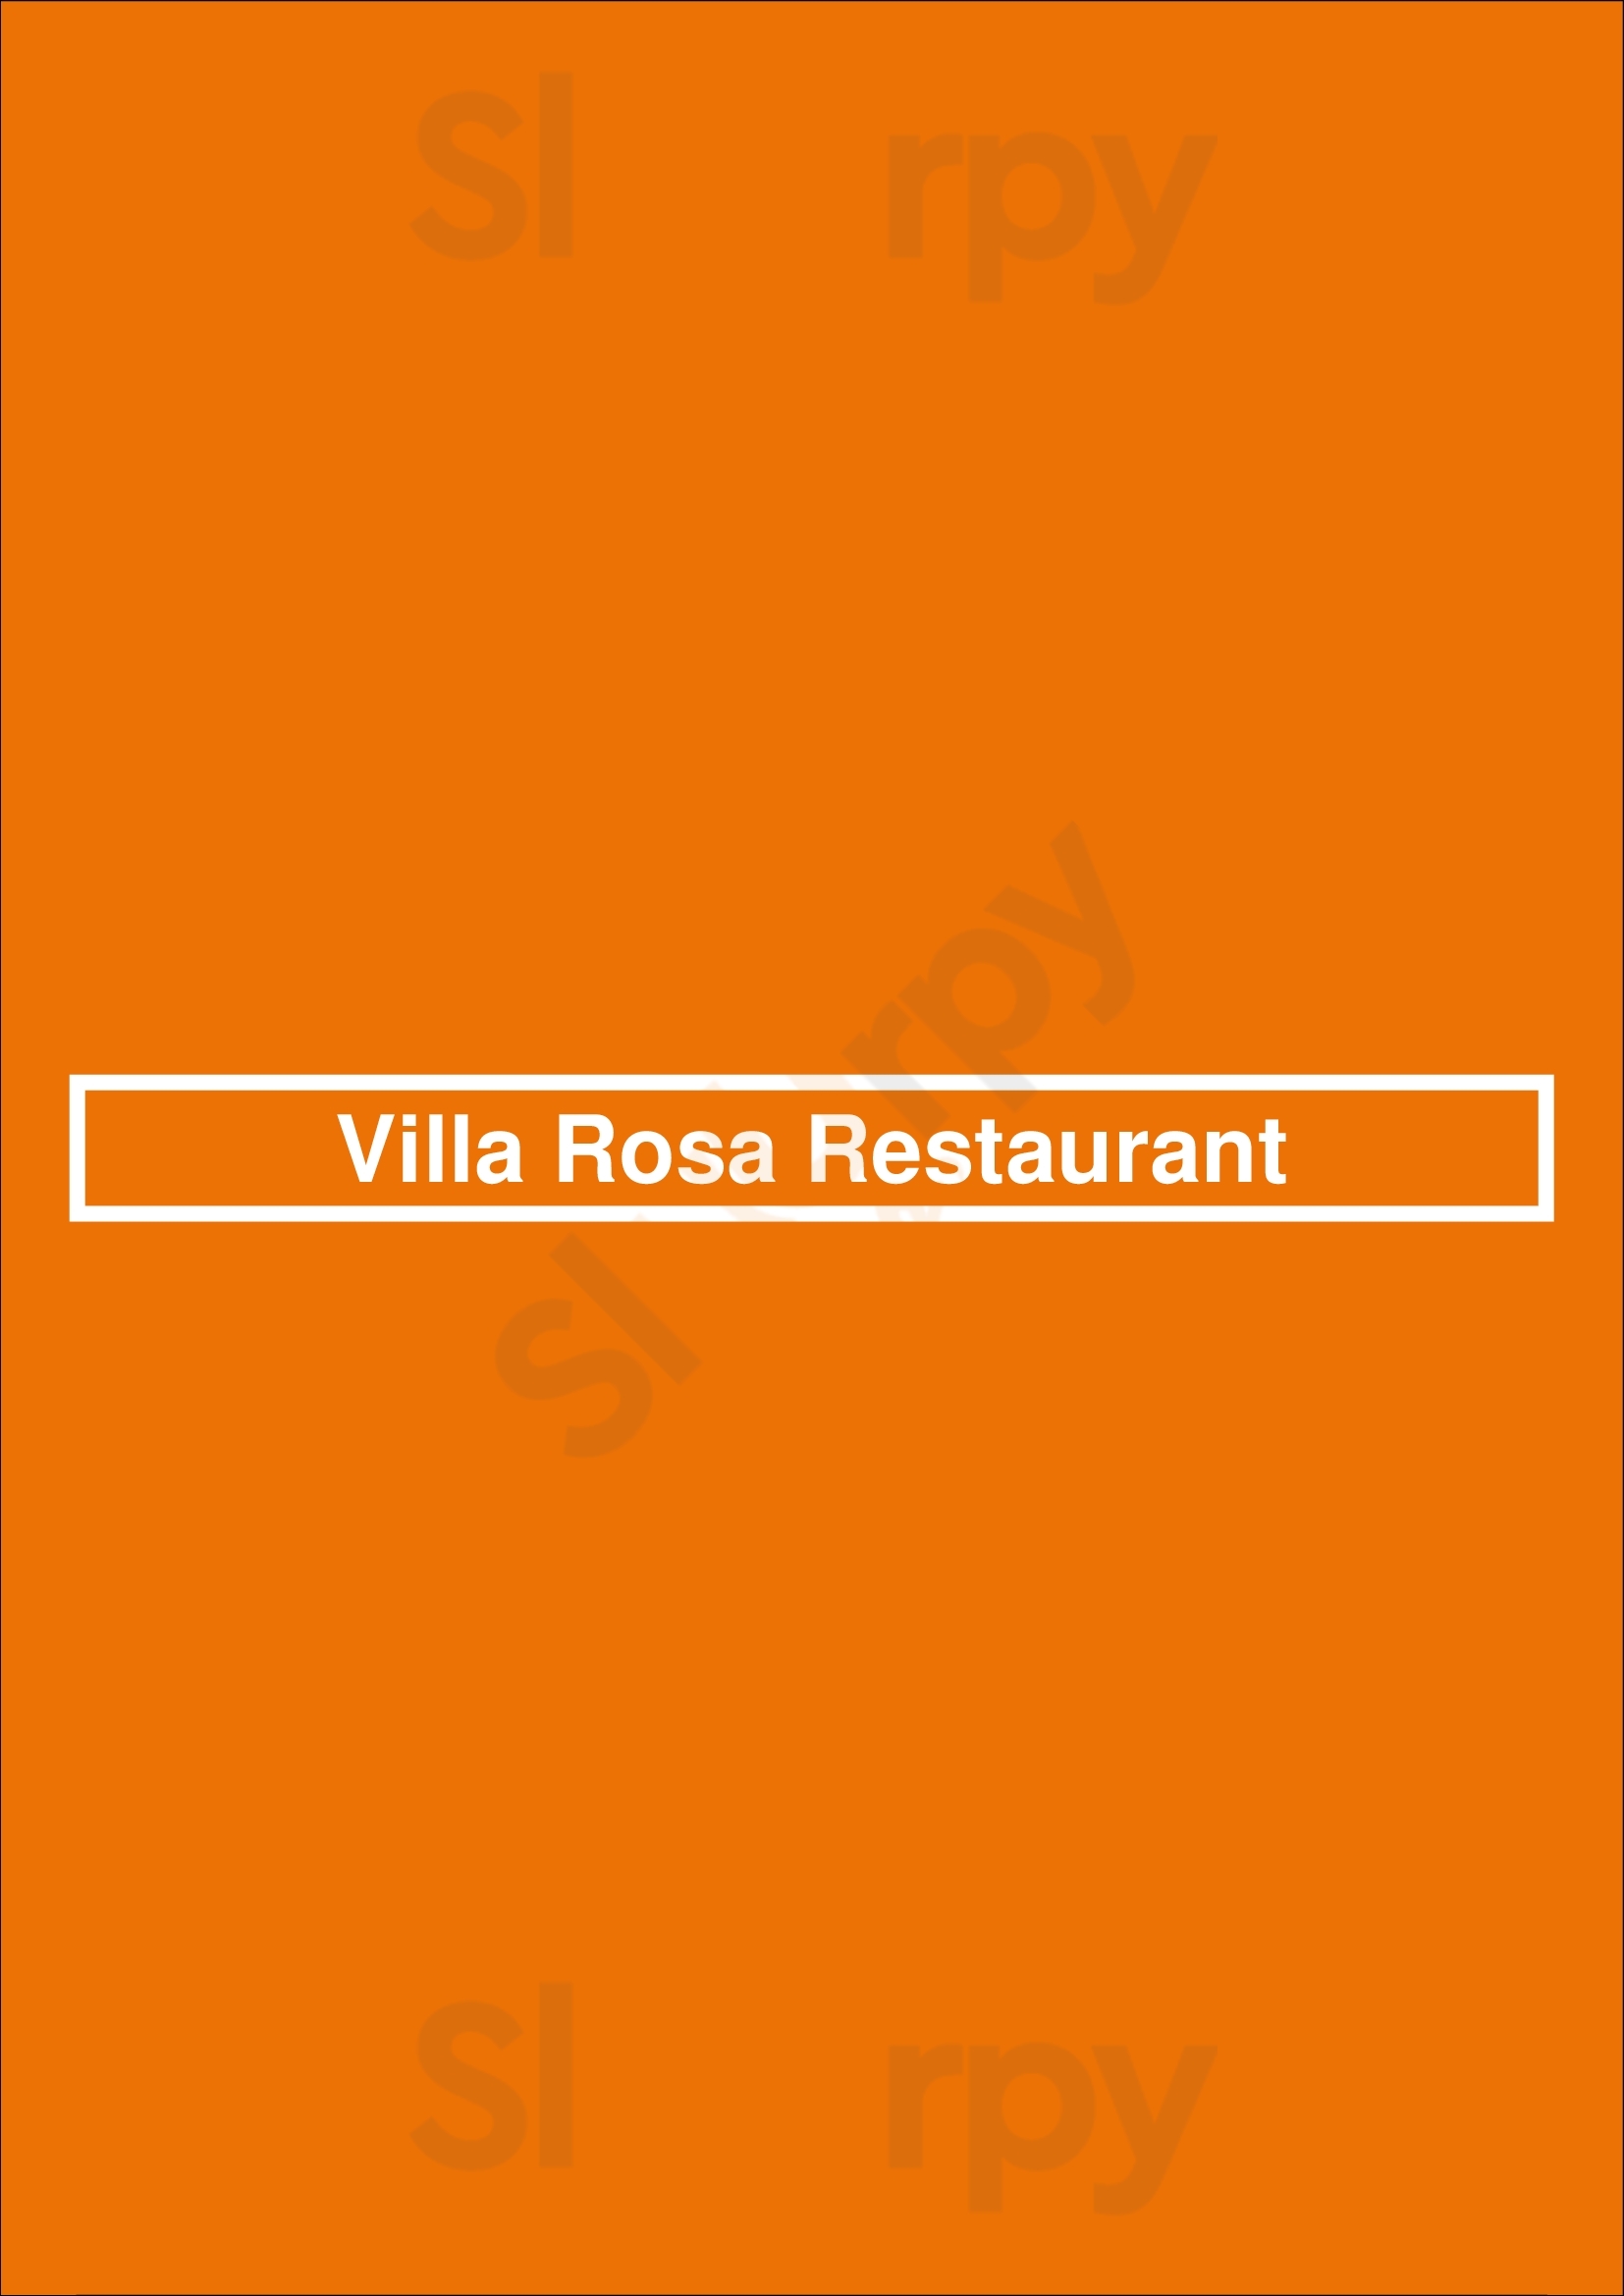 Villa Rosa Restaurant Penticton Menu - 1